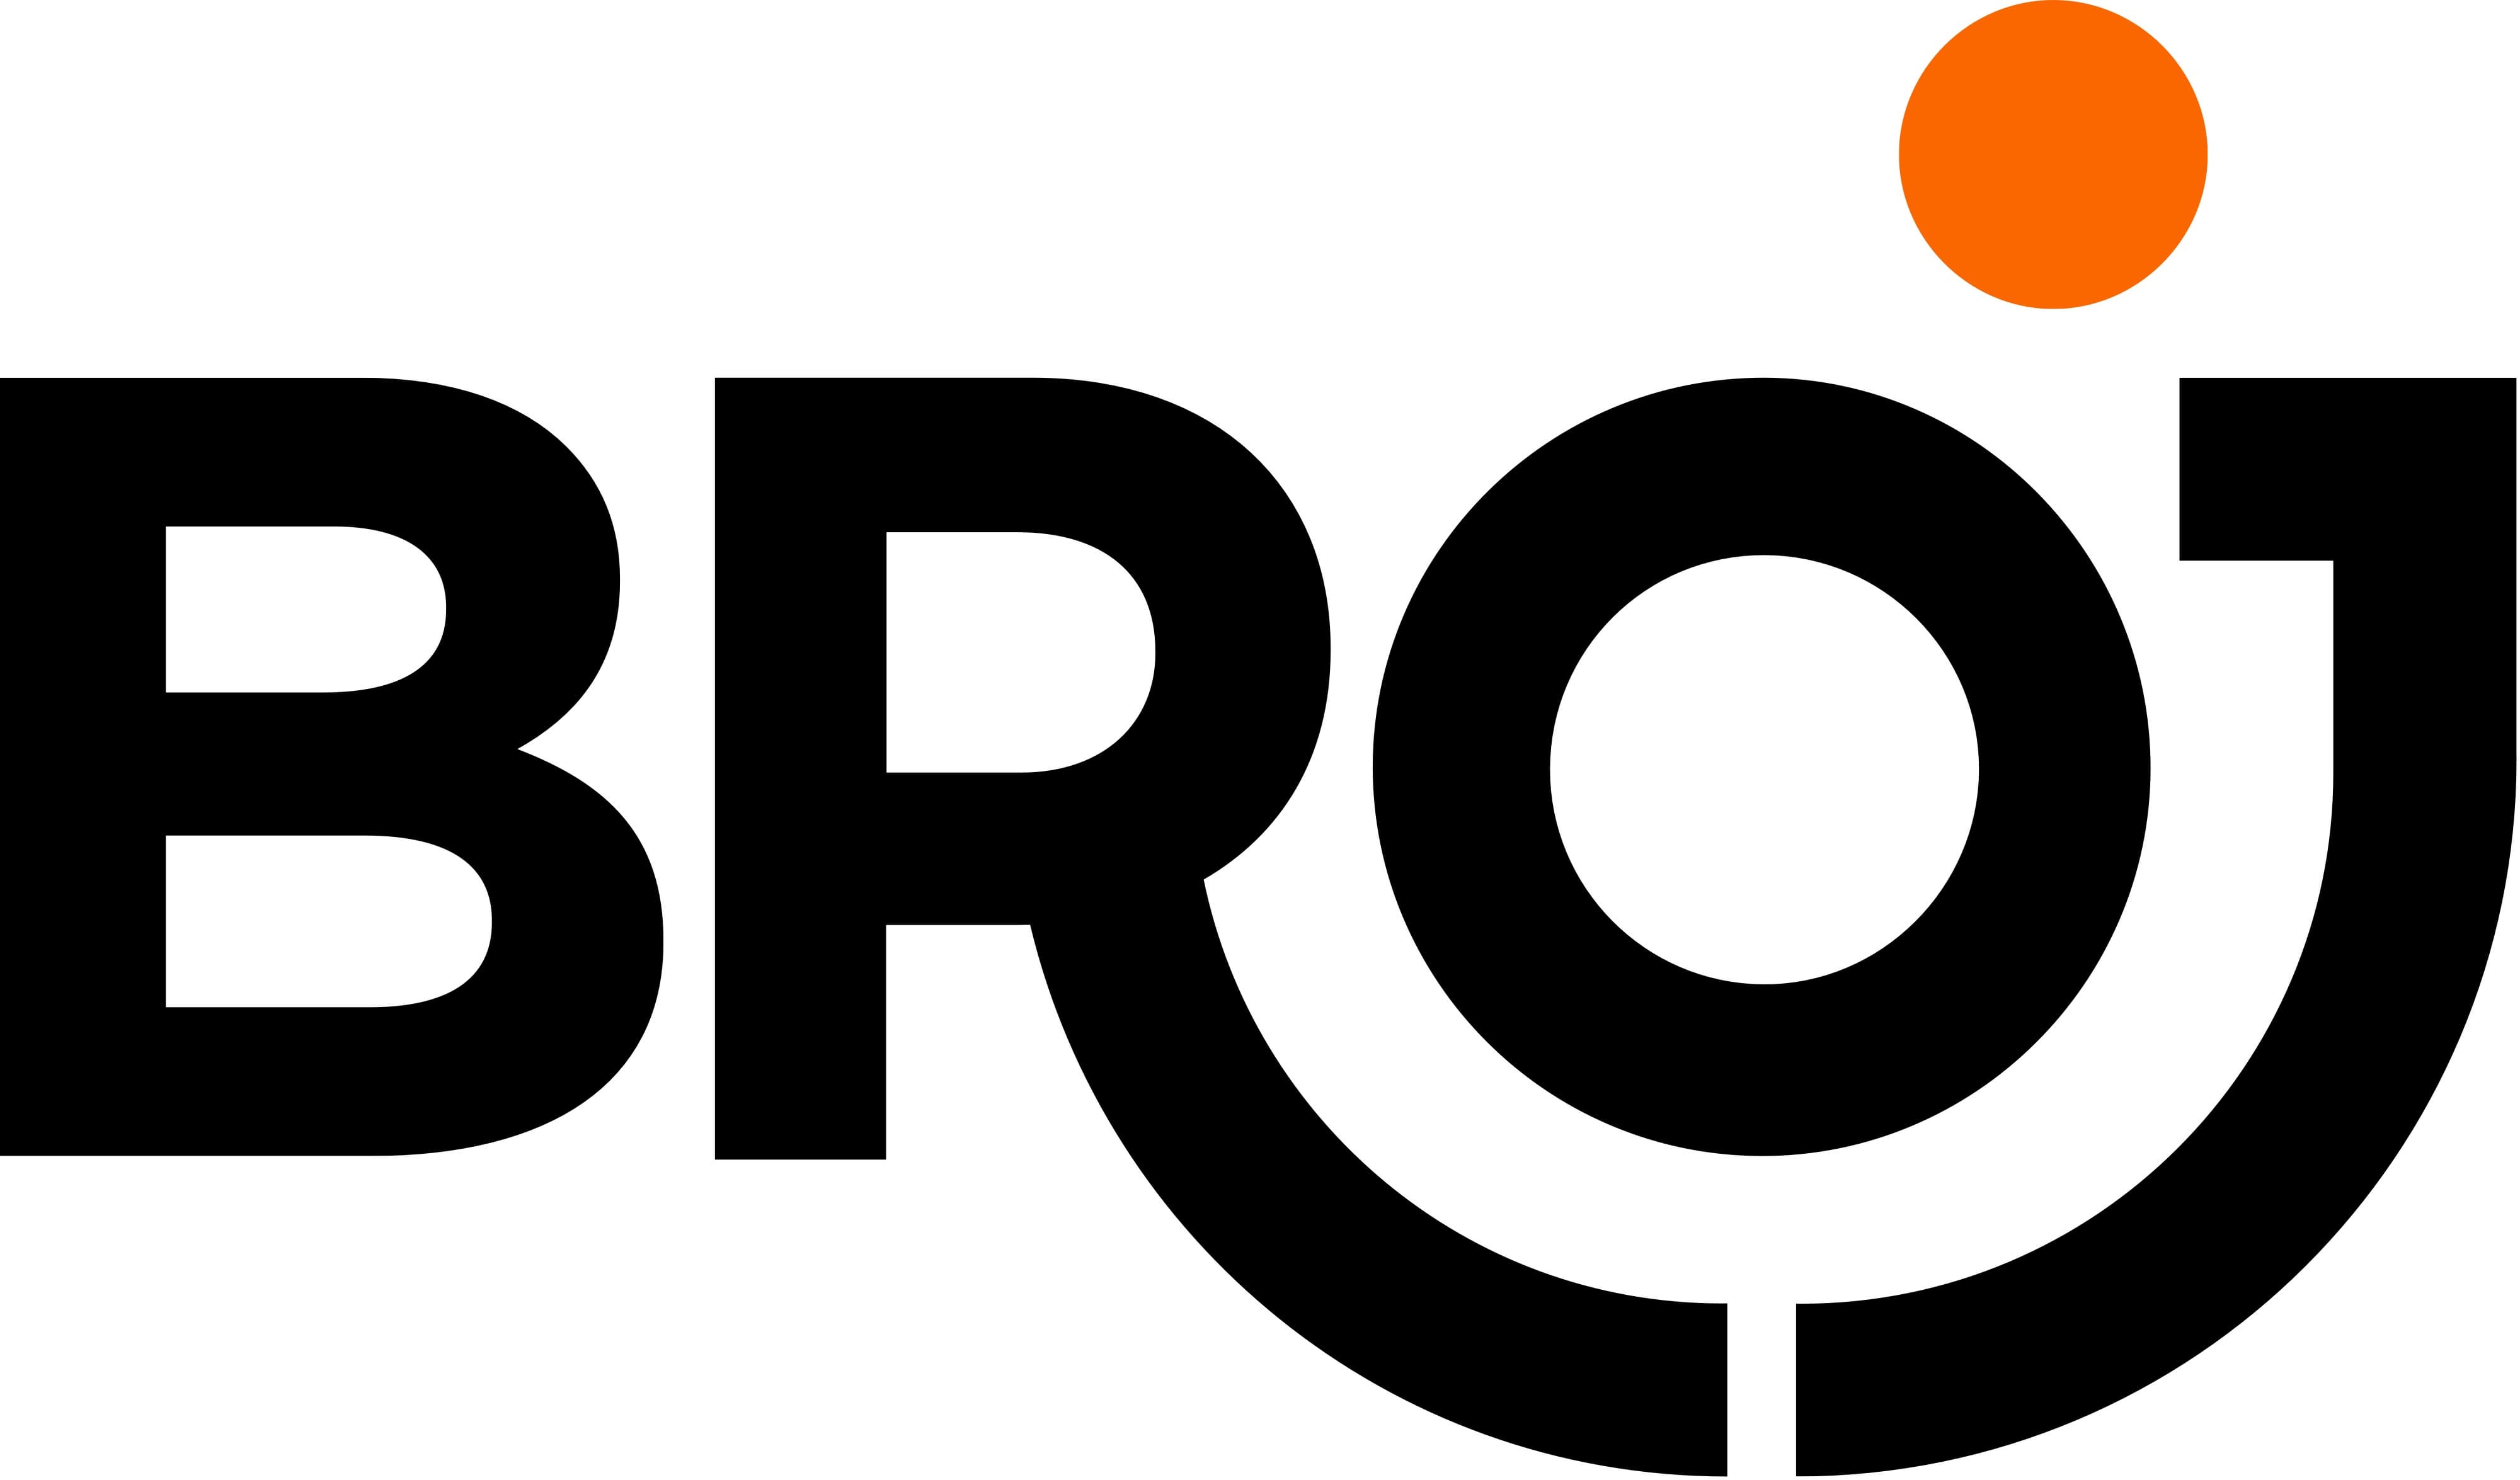 BROJ., Ltd.